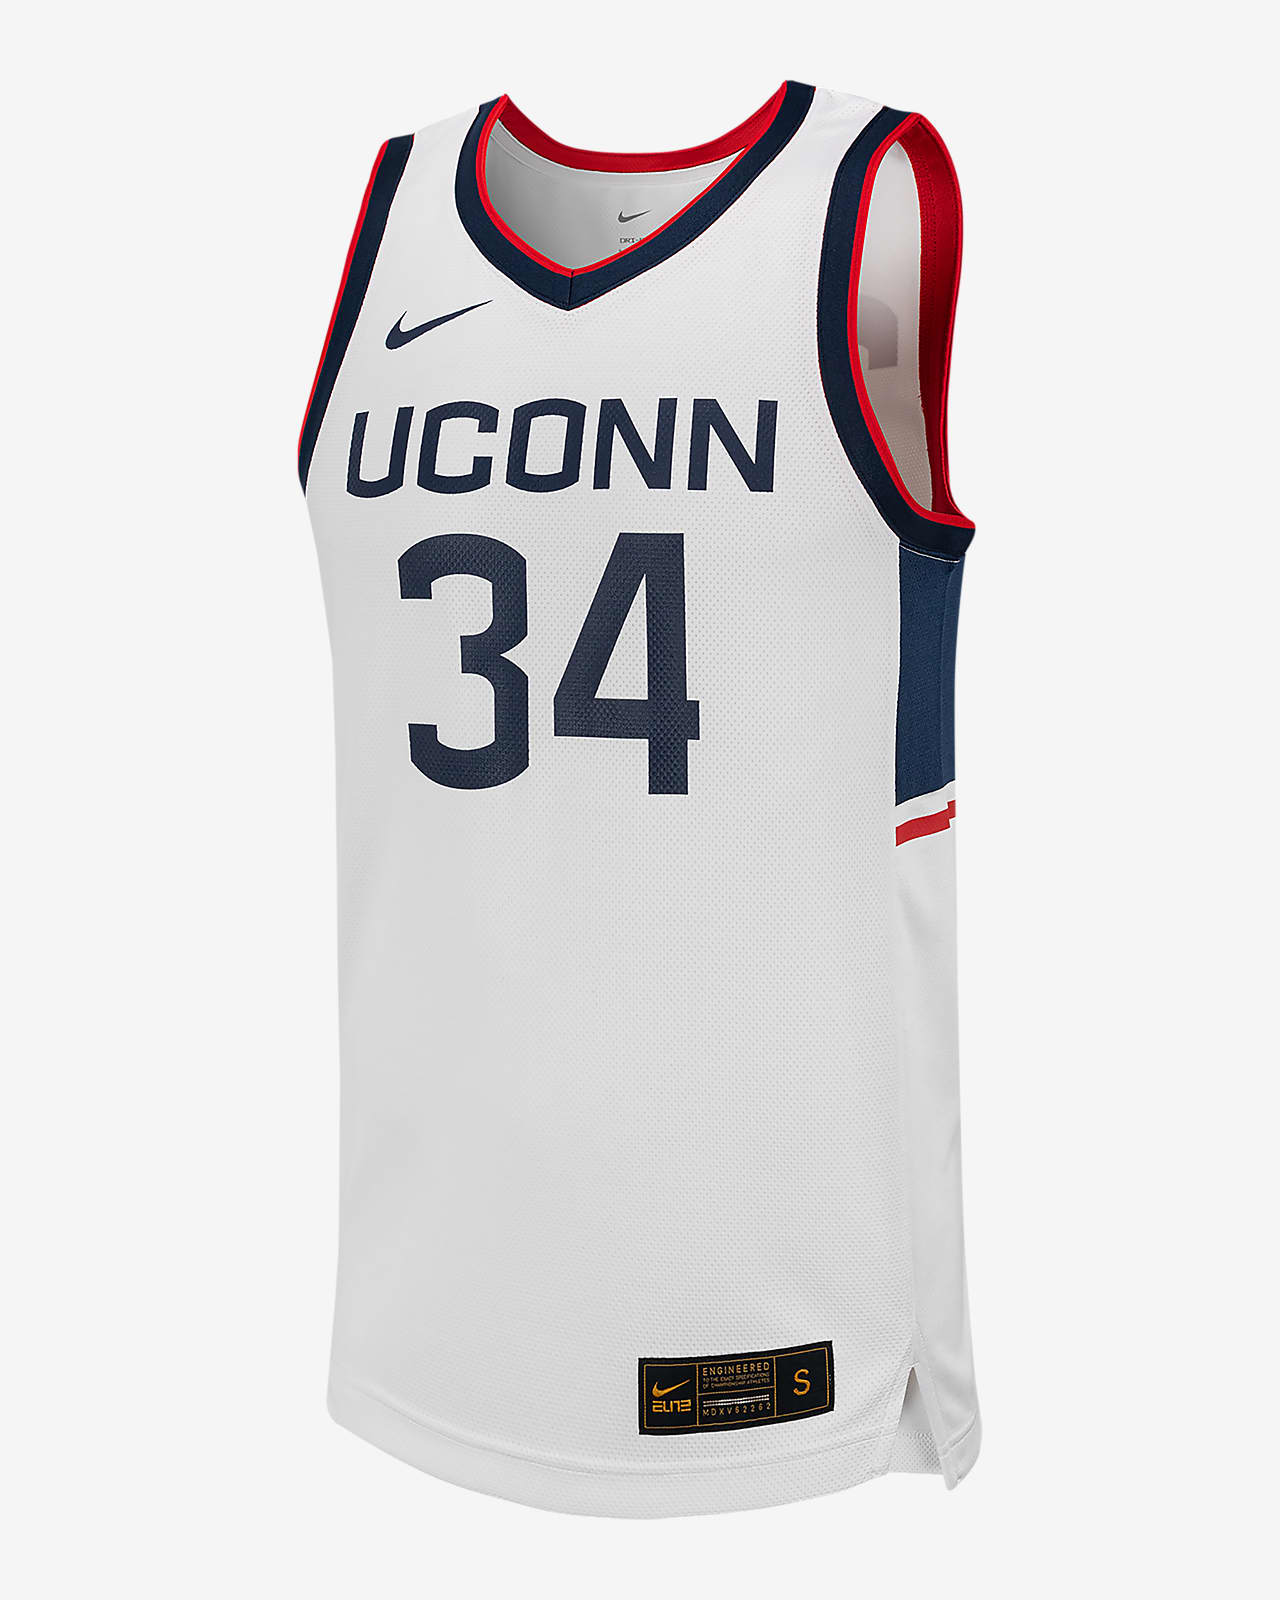 UConn Men's Nike College Basketball Replica Jersey